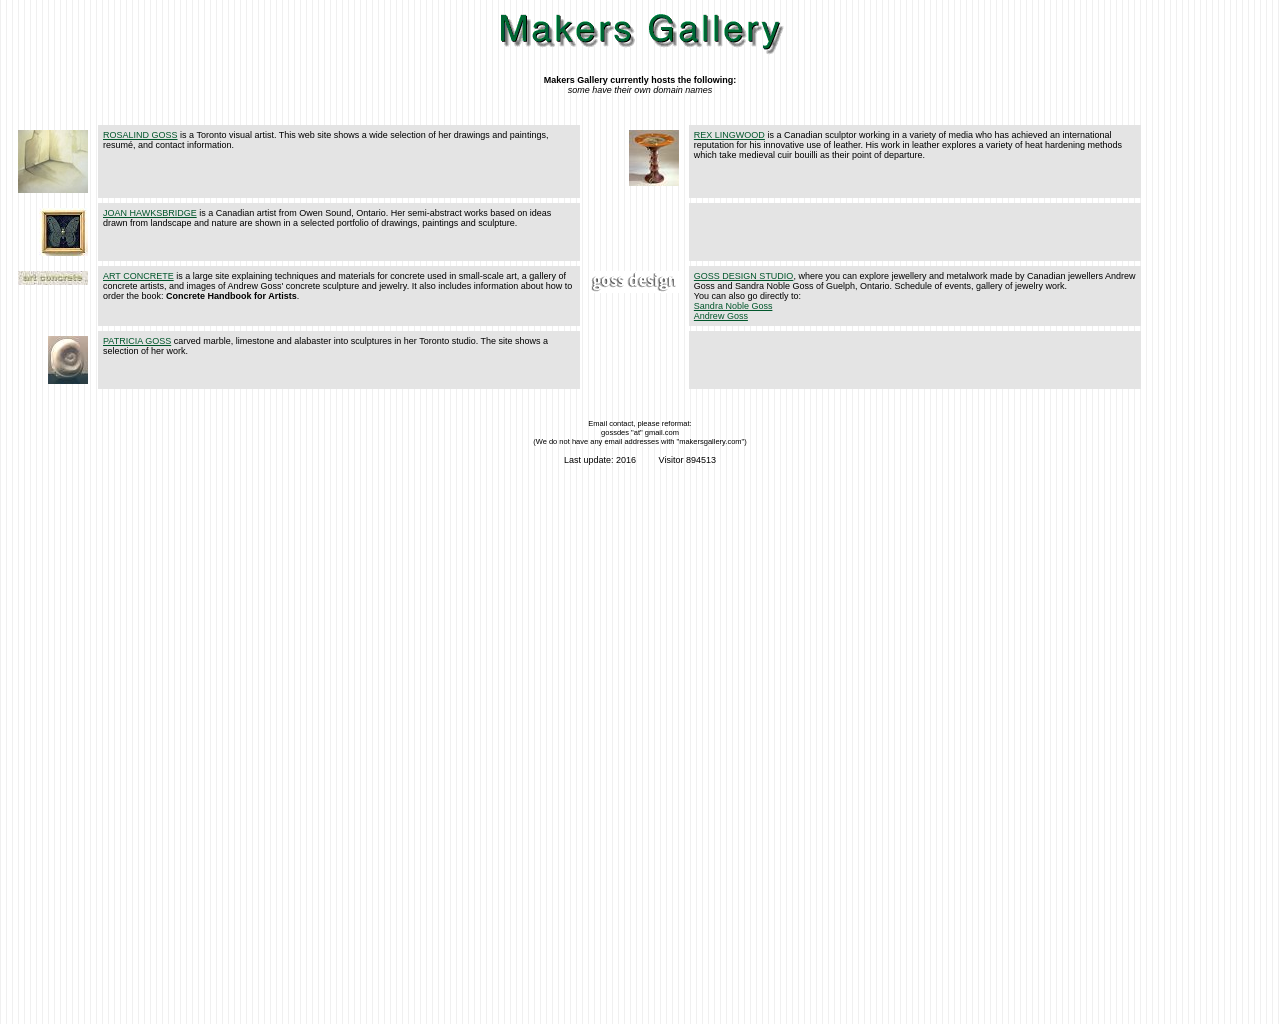 makersgallery.com